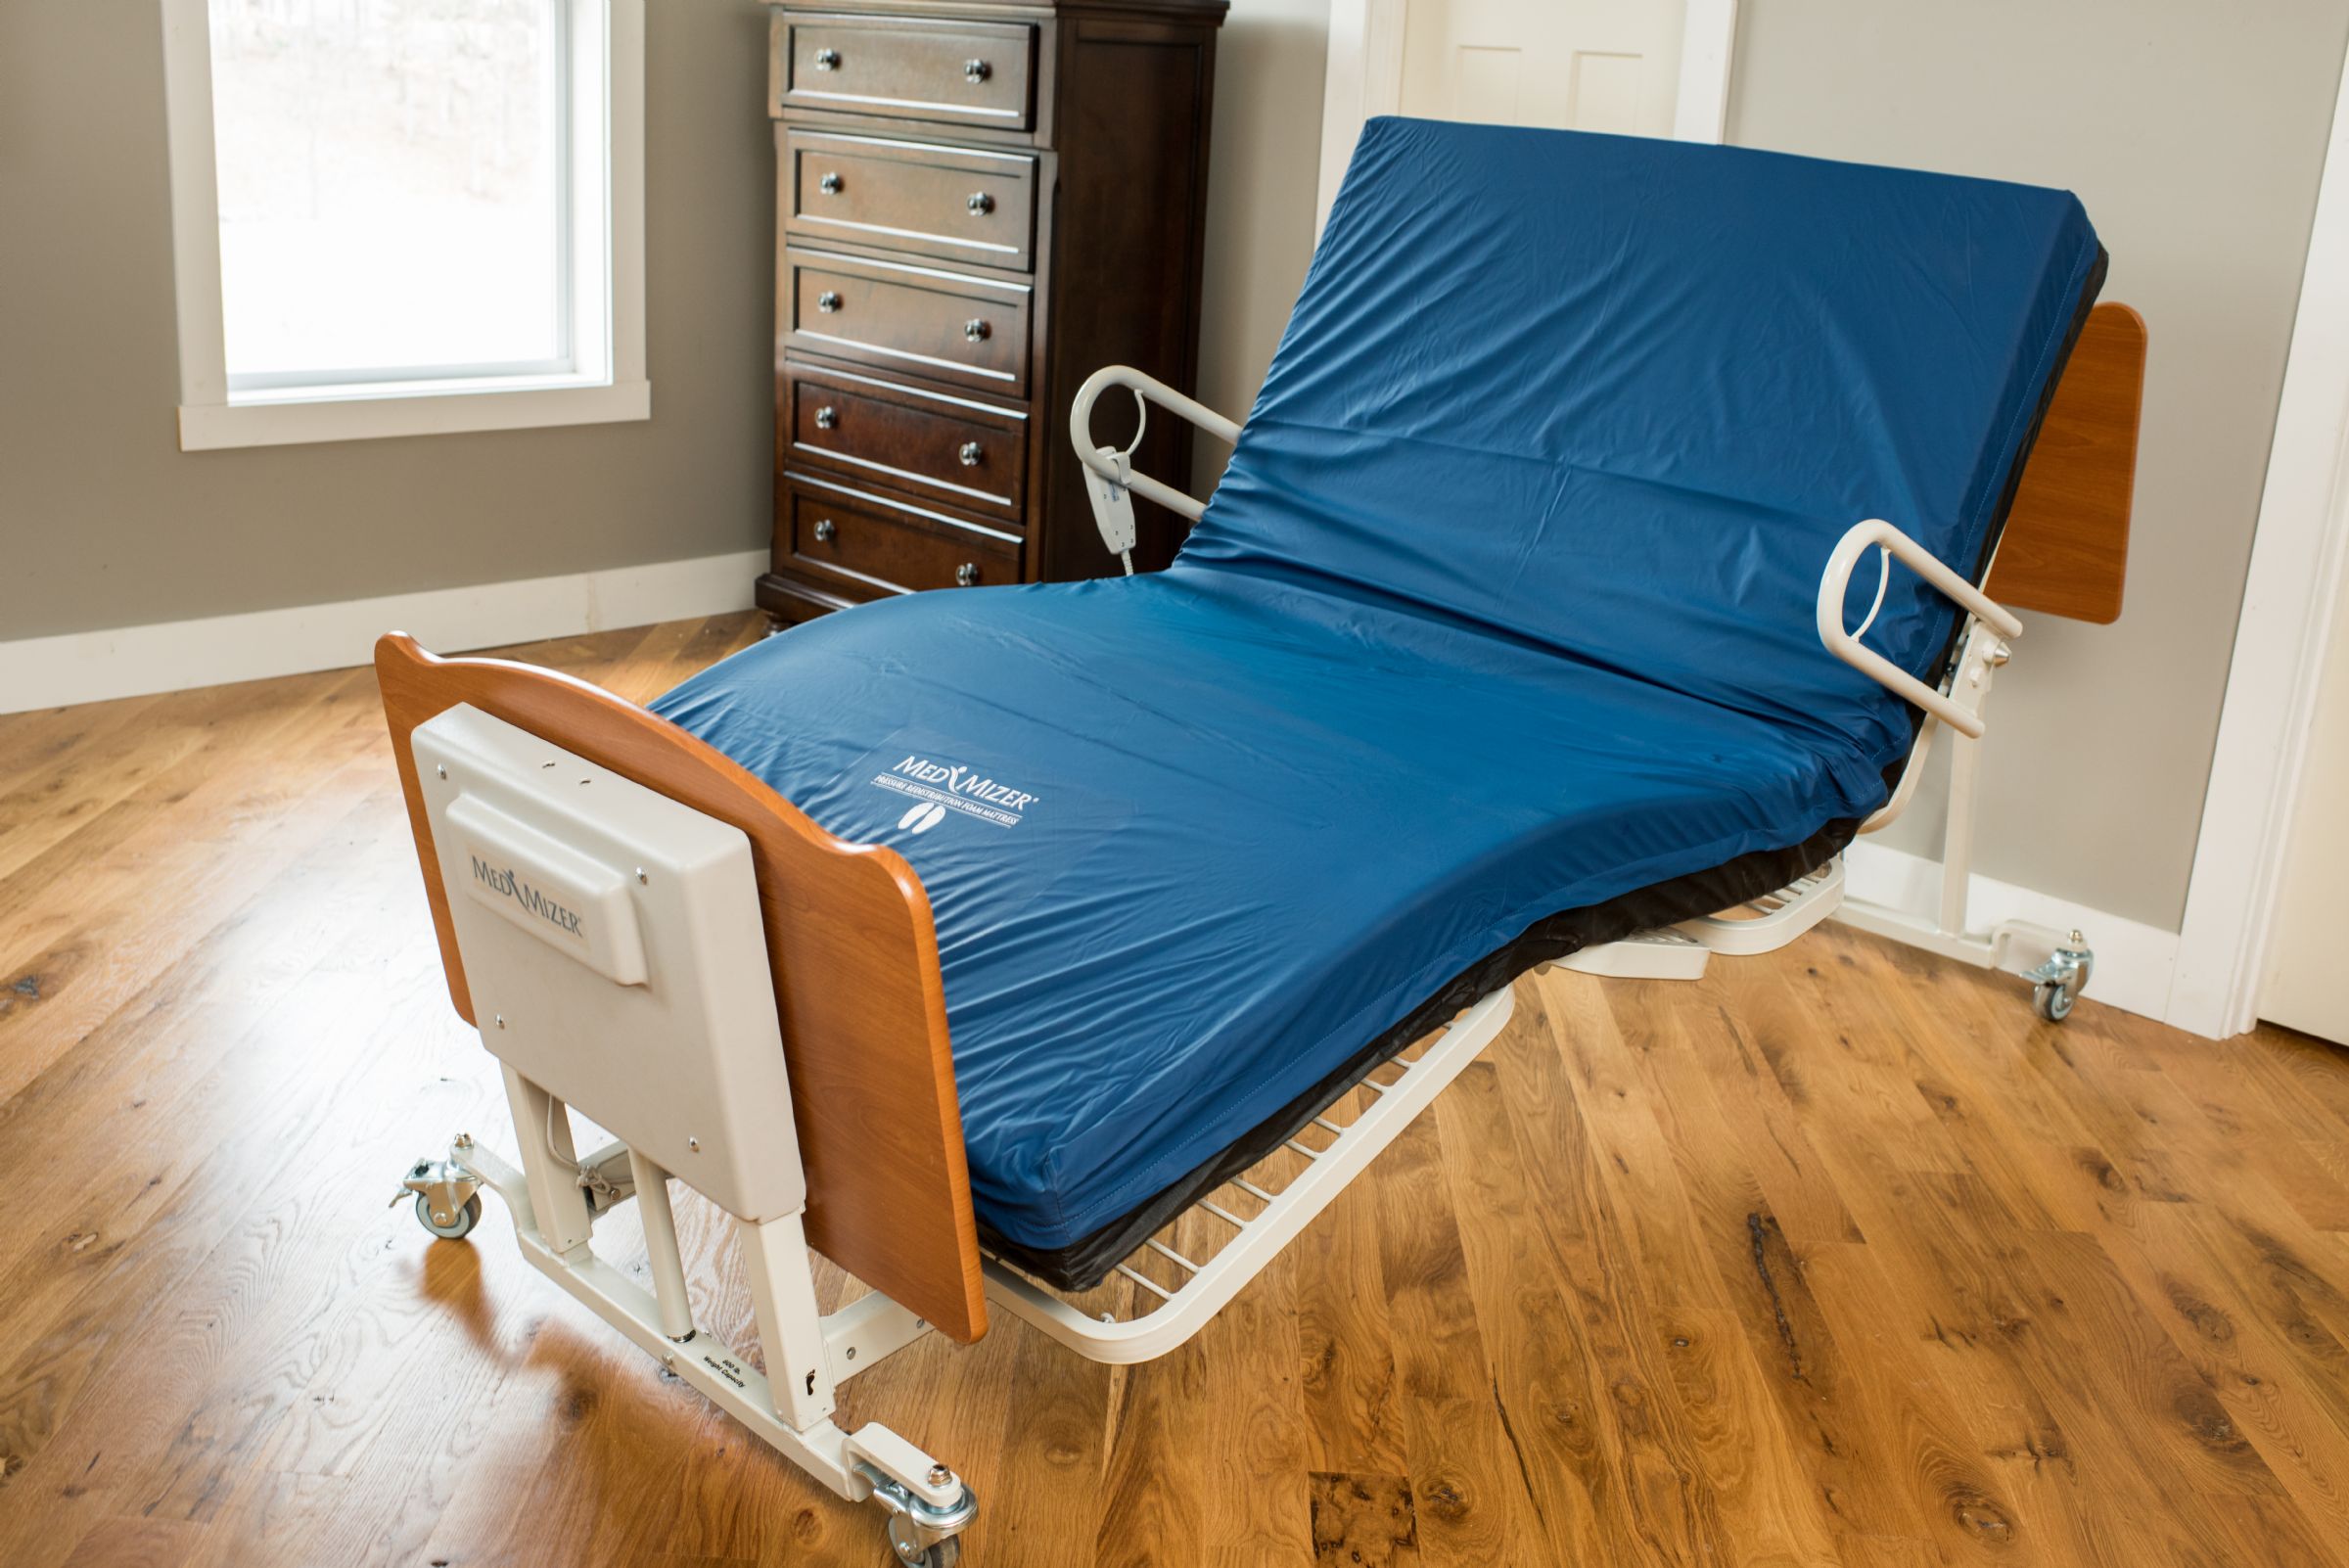 extra long hospital bed mattress